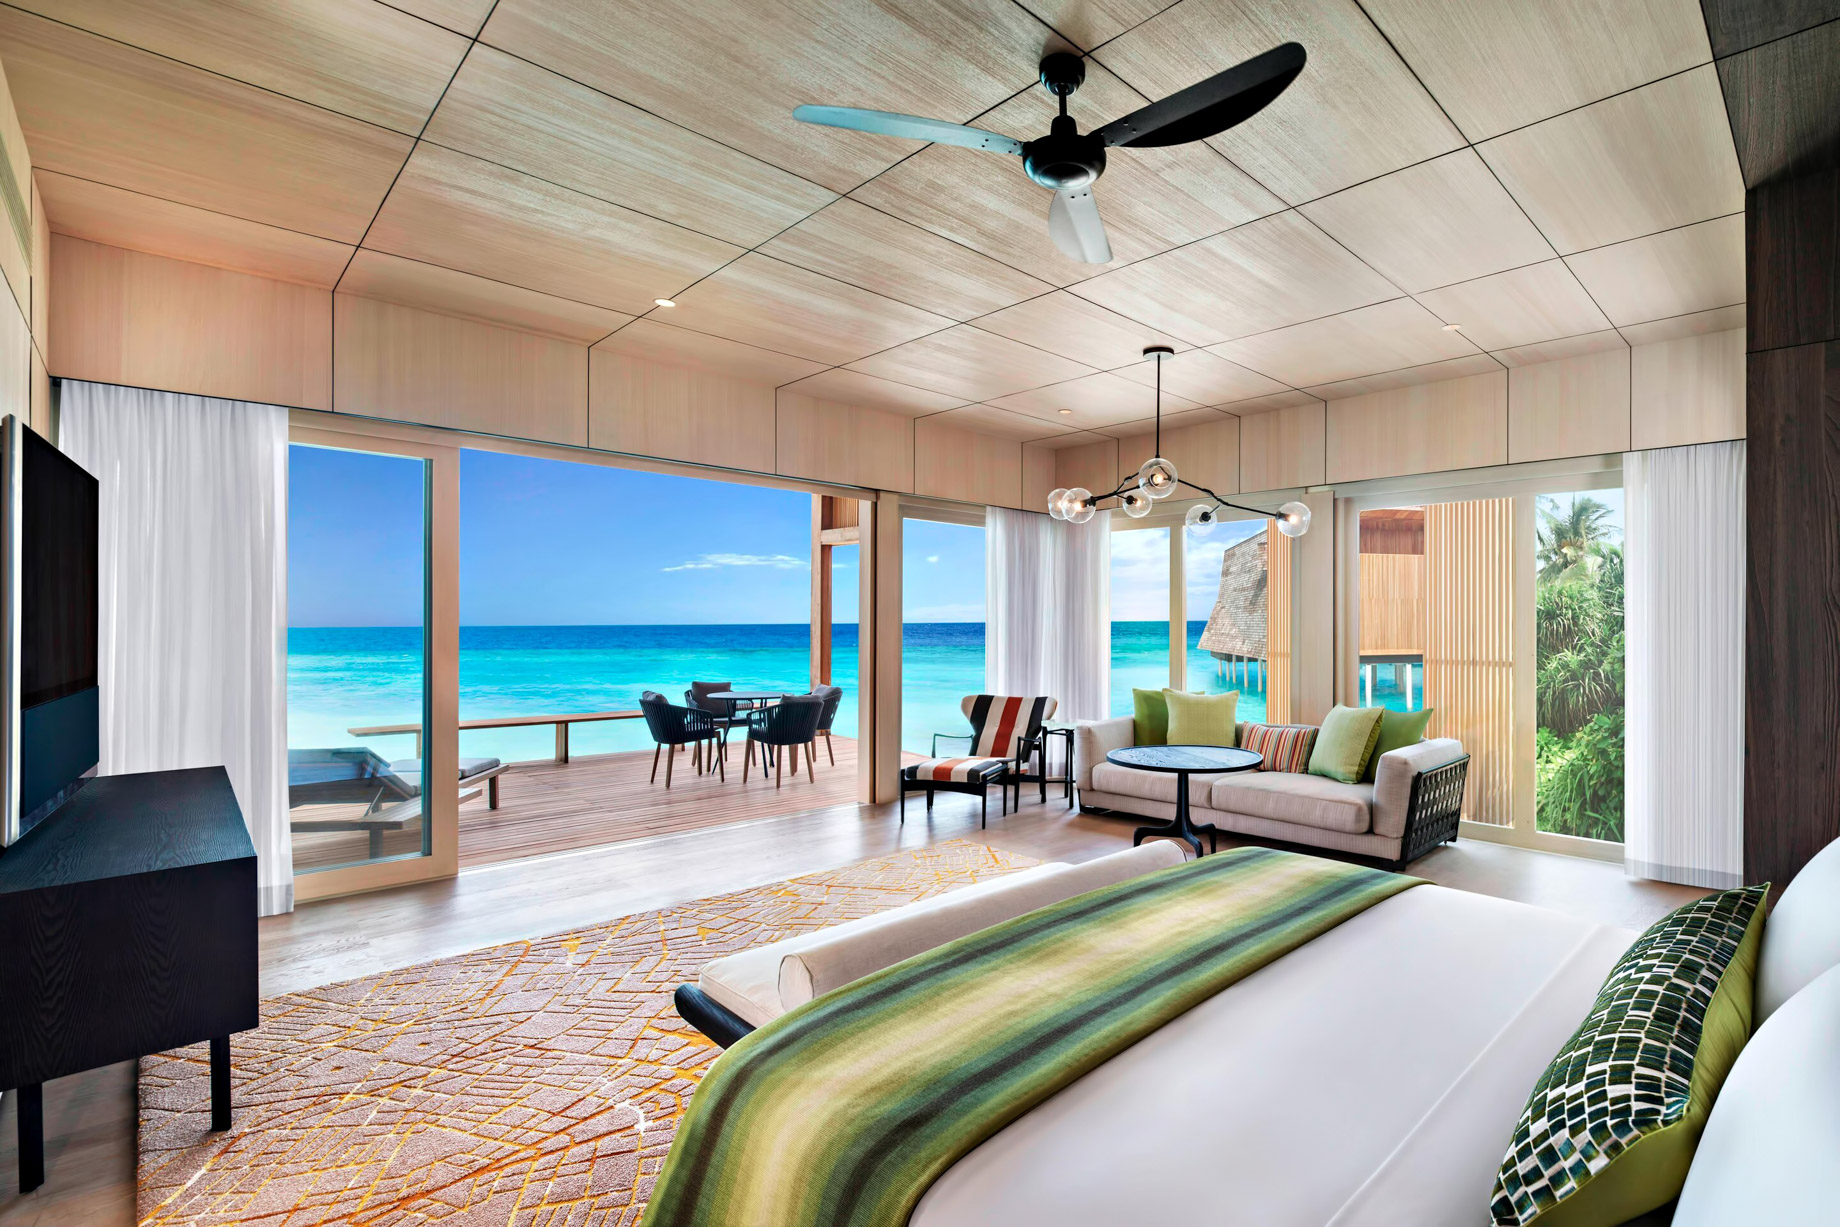 The St. Regis Maldives Vommuli Resort - Dhaalu Atoll, Maldives - Two Bedroom Beach Villa